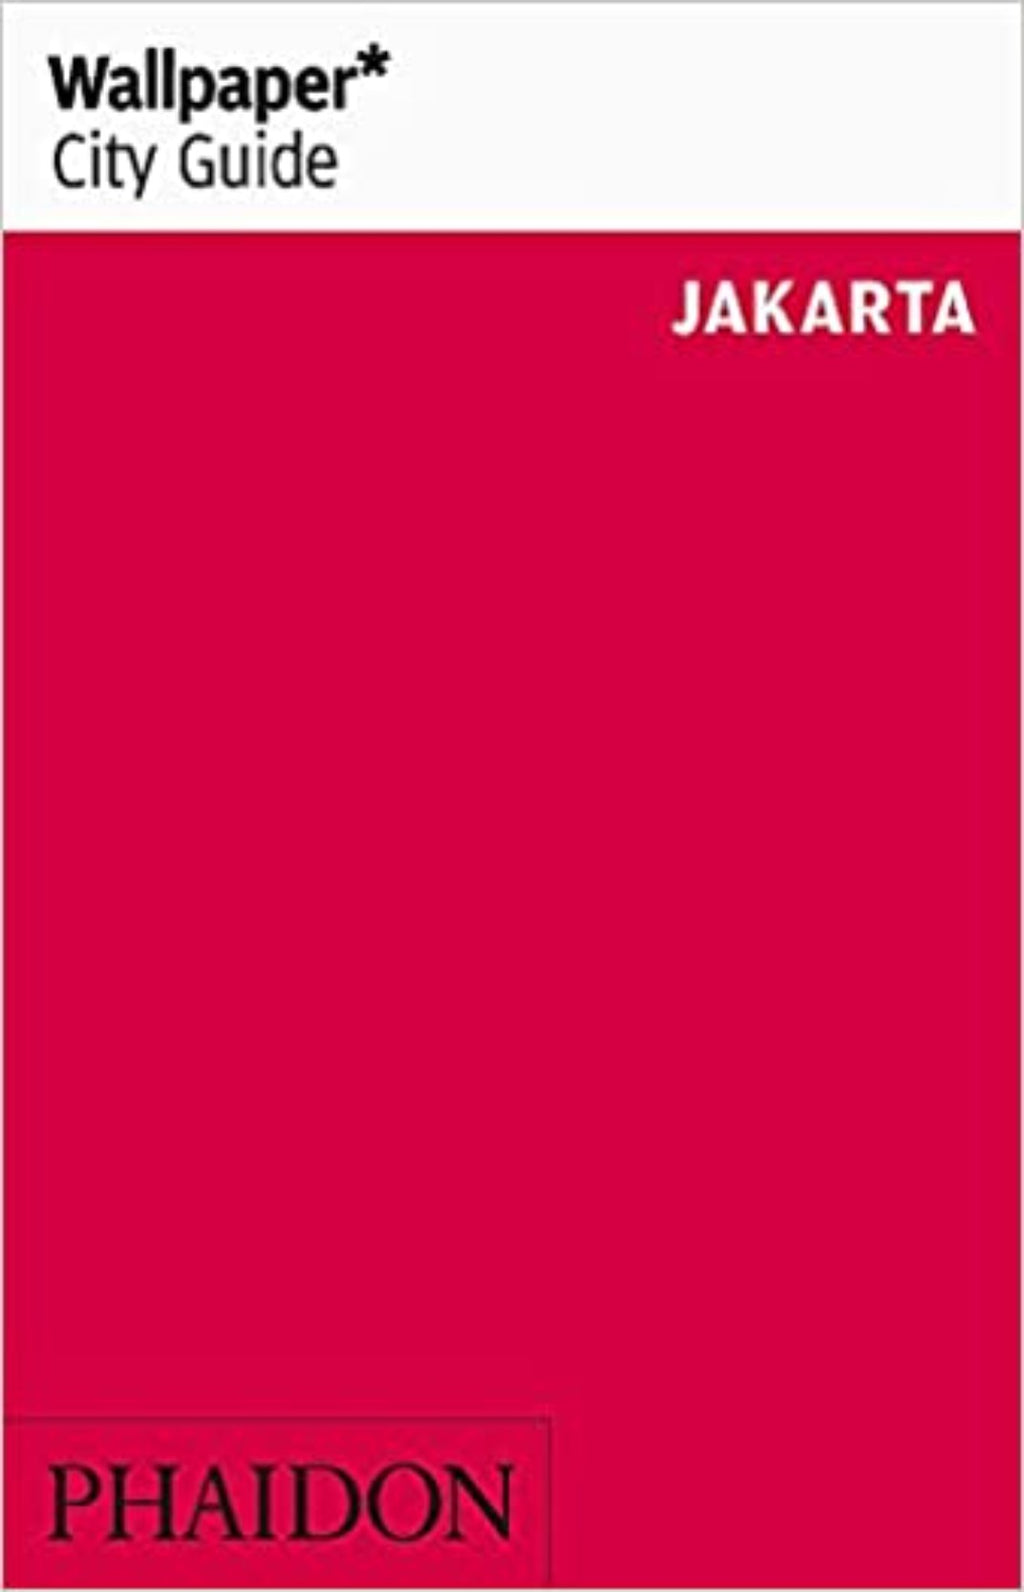 Wallpaper* City Guide - Jakarta